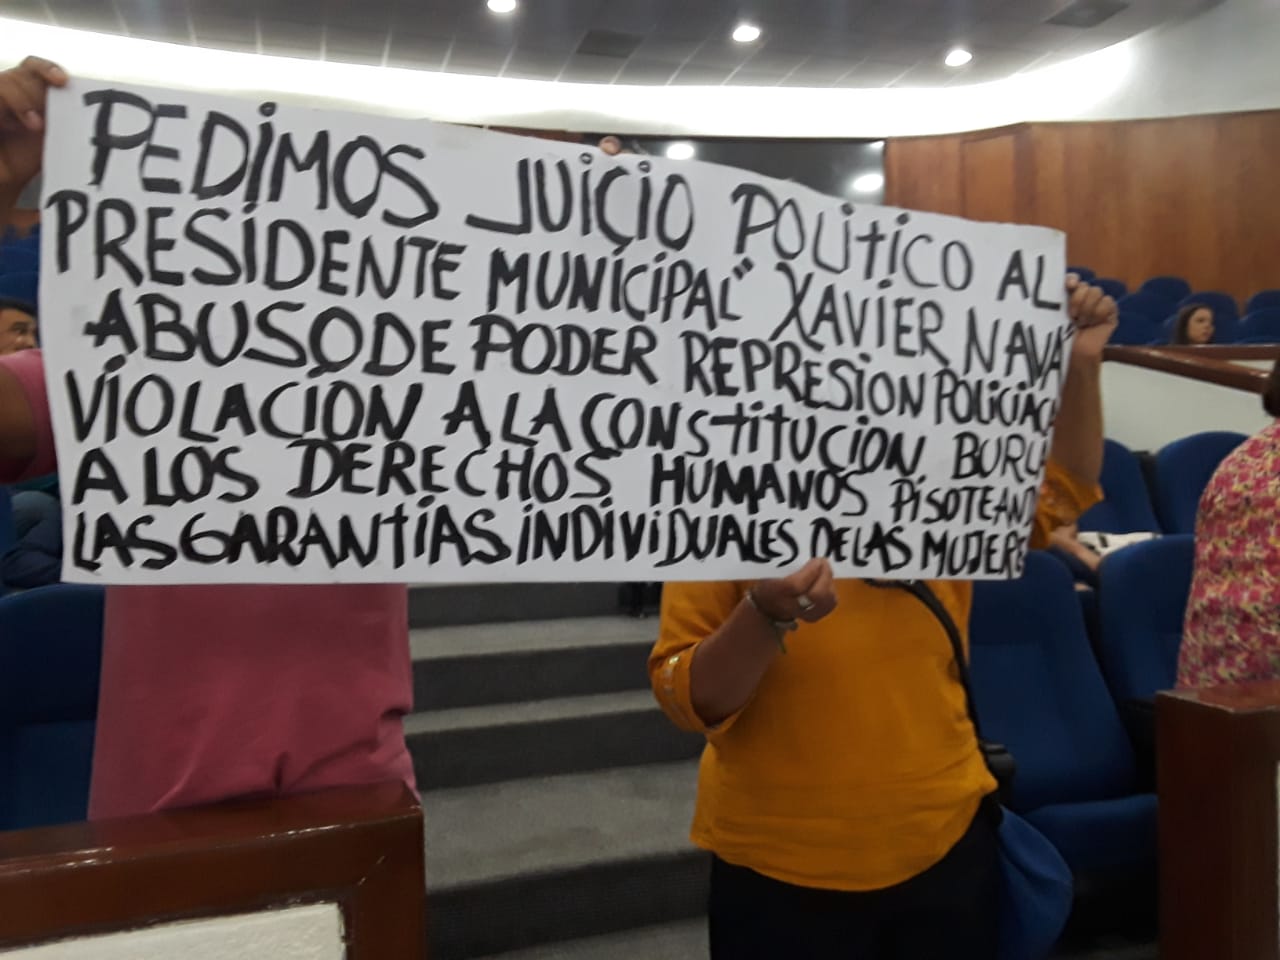  Ambulantes desalojados del Carmen desmienten a la titular de la UGCH; no hay diálogo, afirman